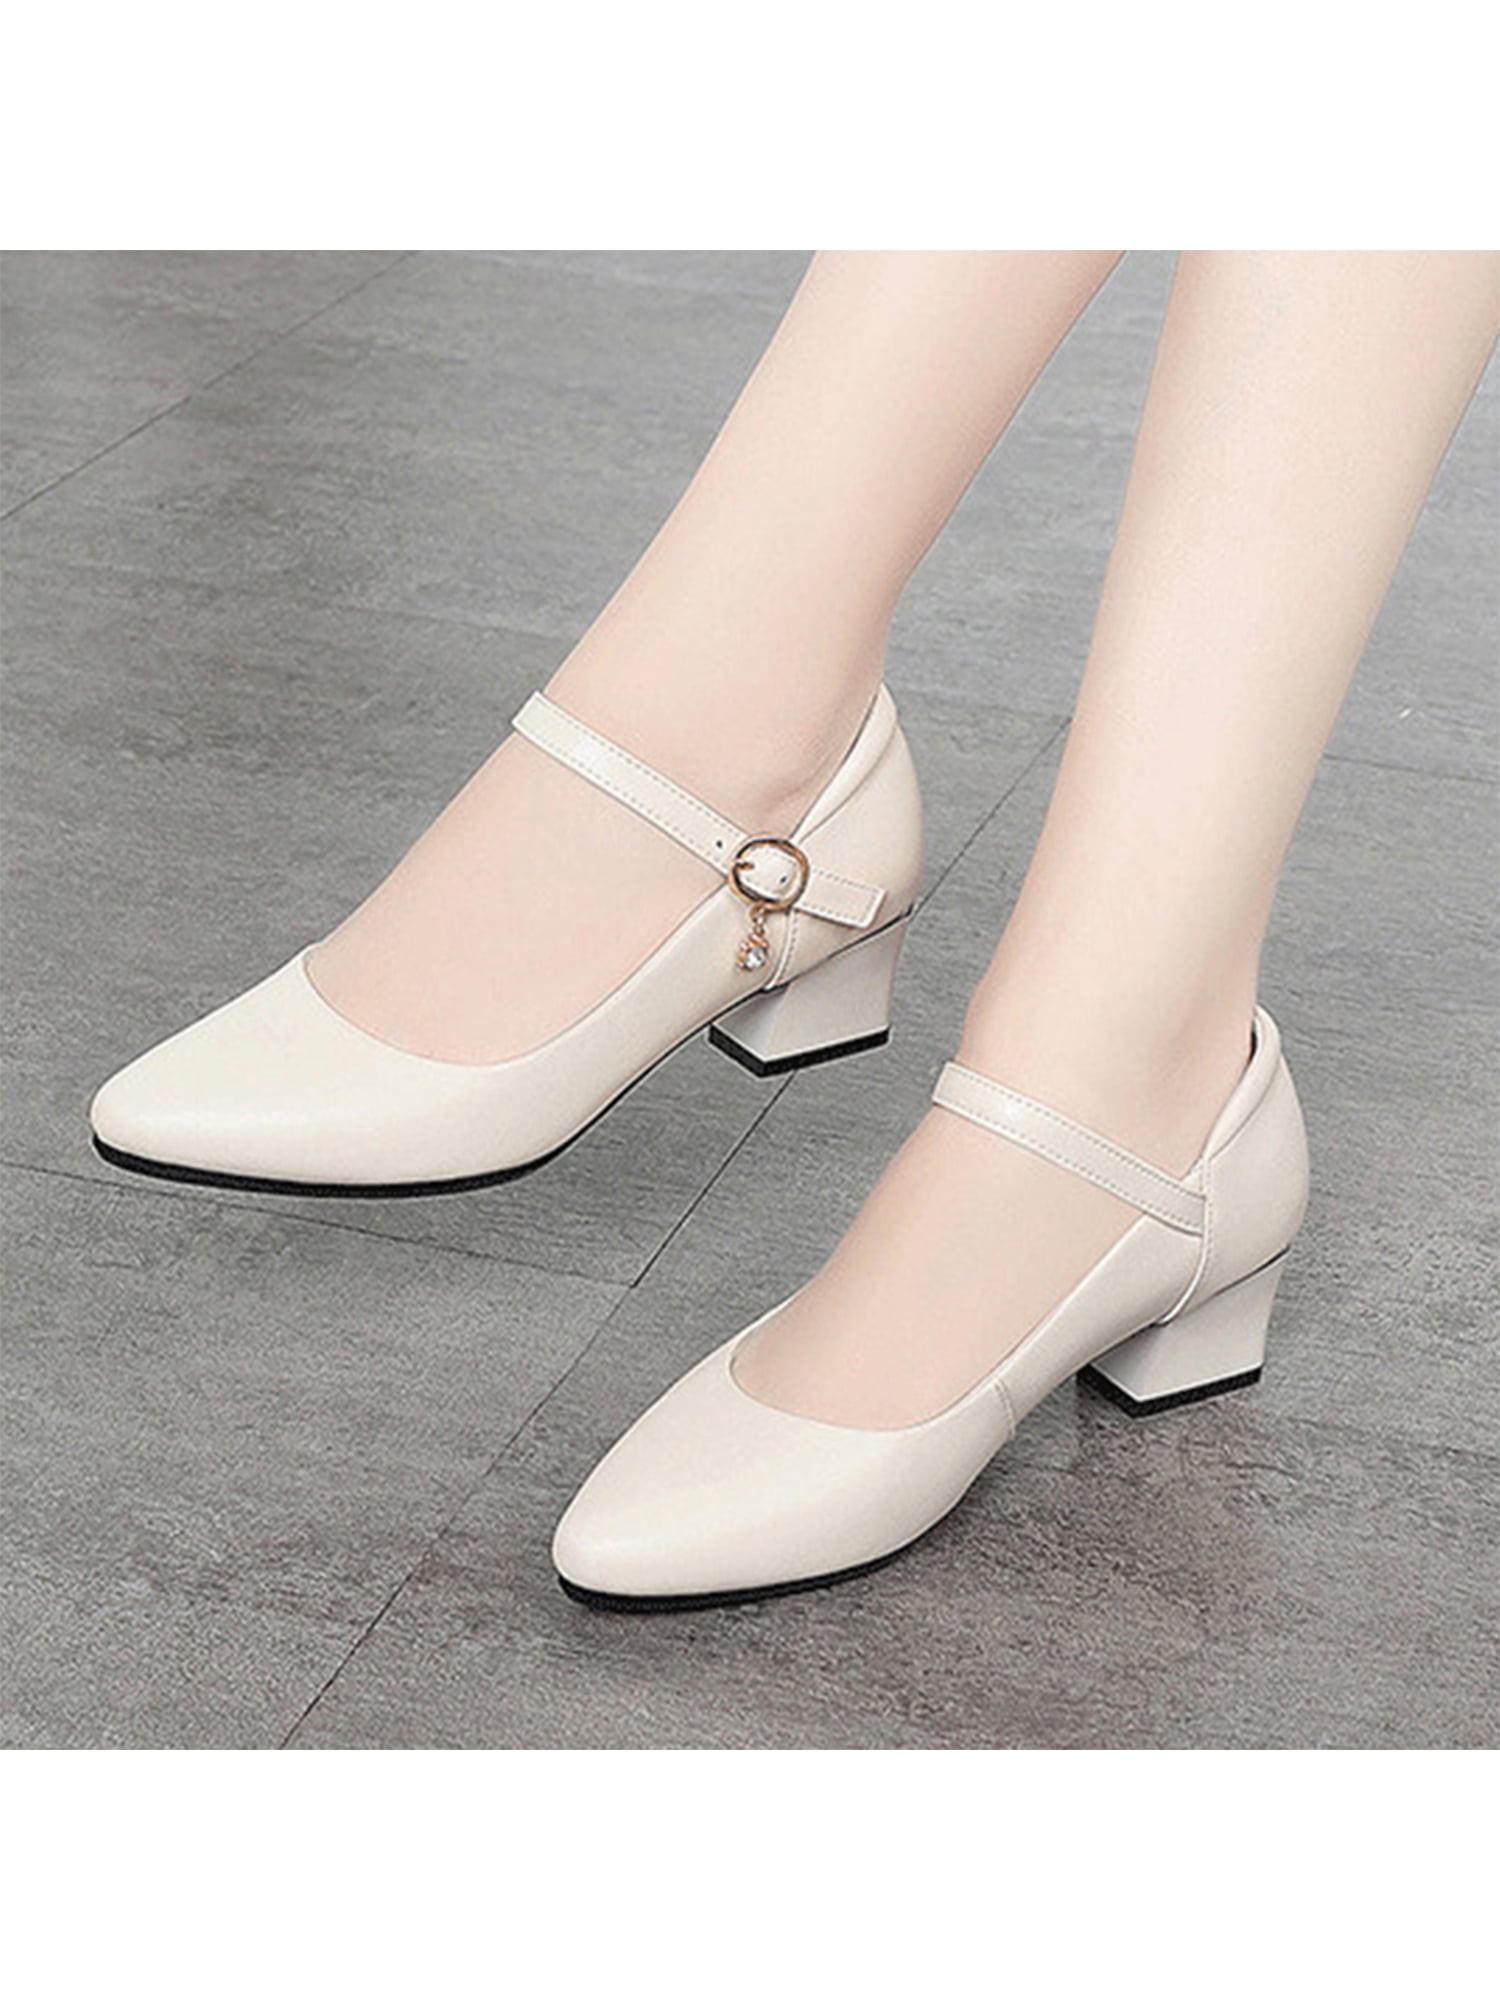 Cream Low Heels Shoes Women Isolated Stock Photo 1747462832 | Shutterstock